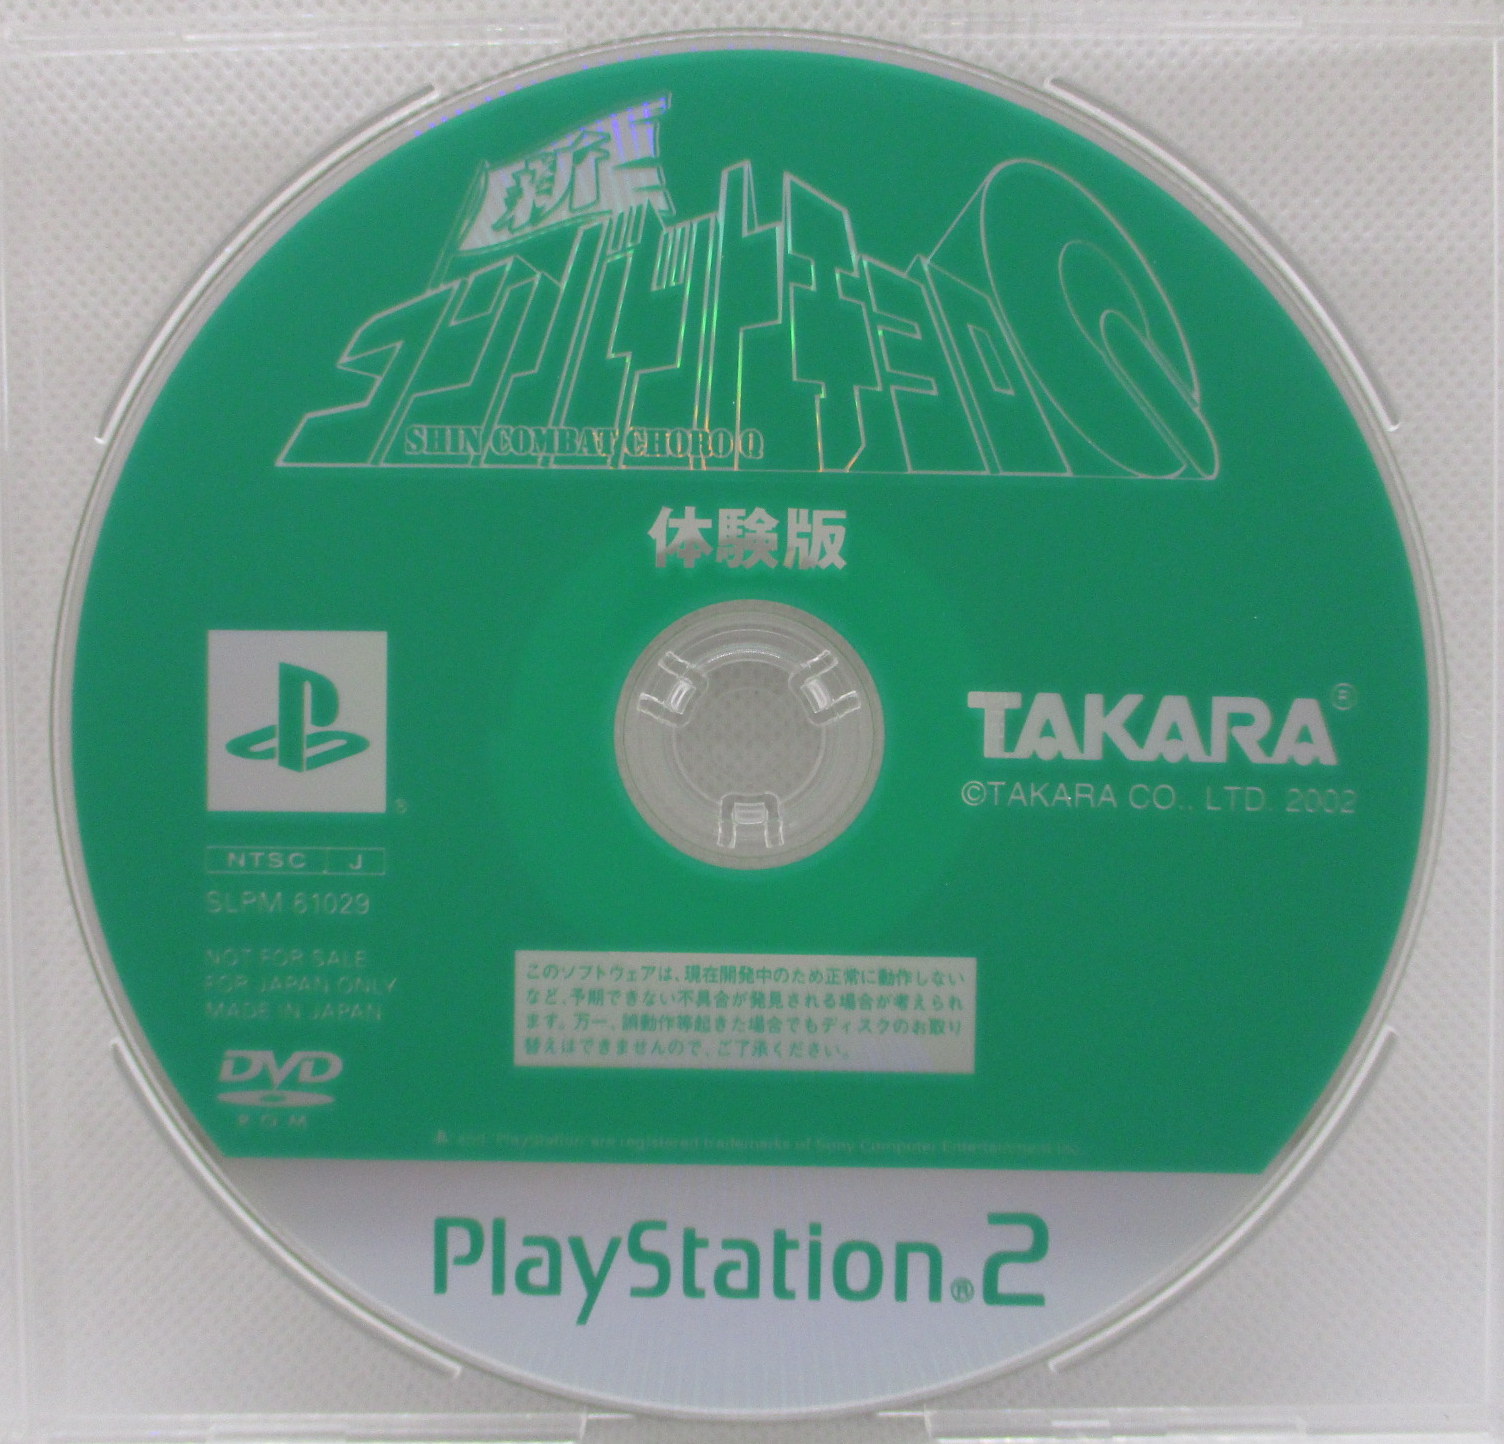 PS2 コンバットチョロQ スペシャルディスク 体験版 - テレビゲーム